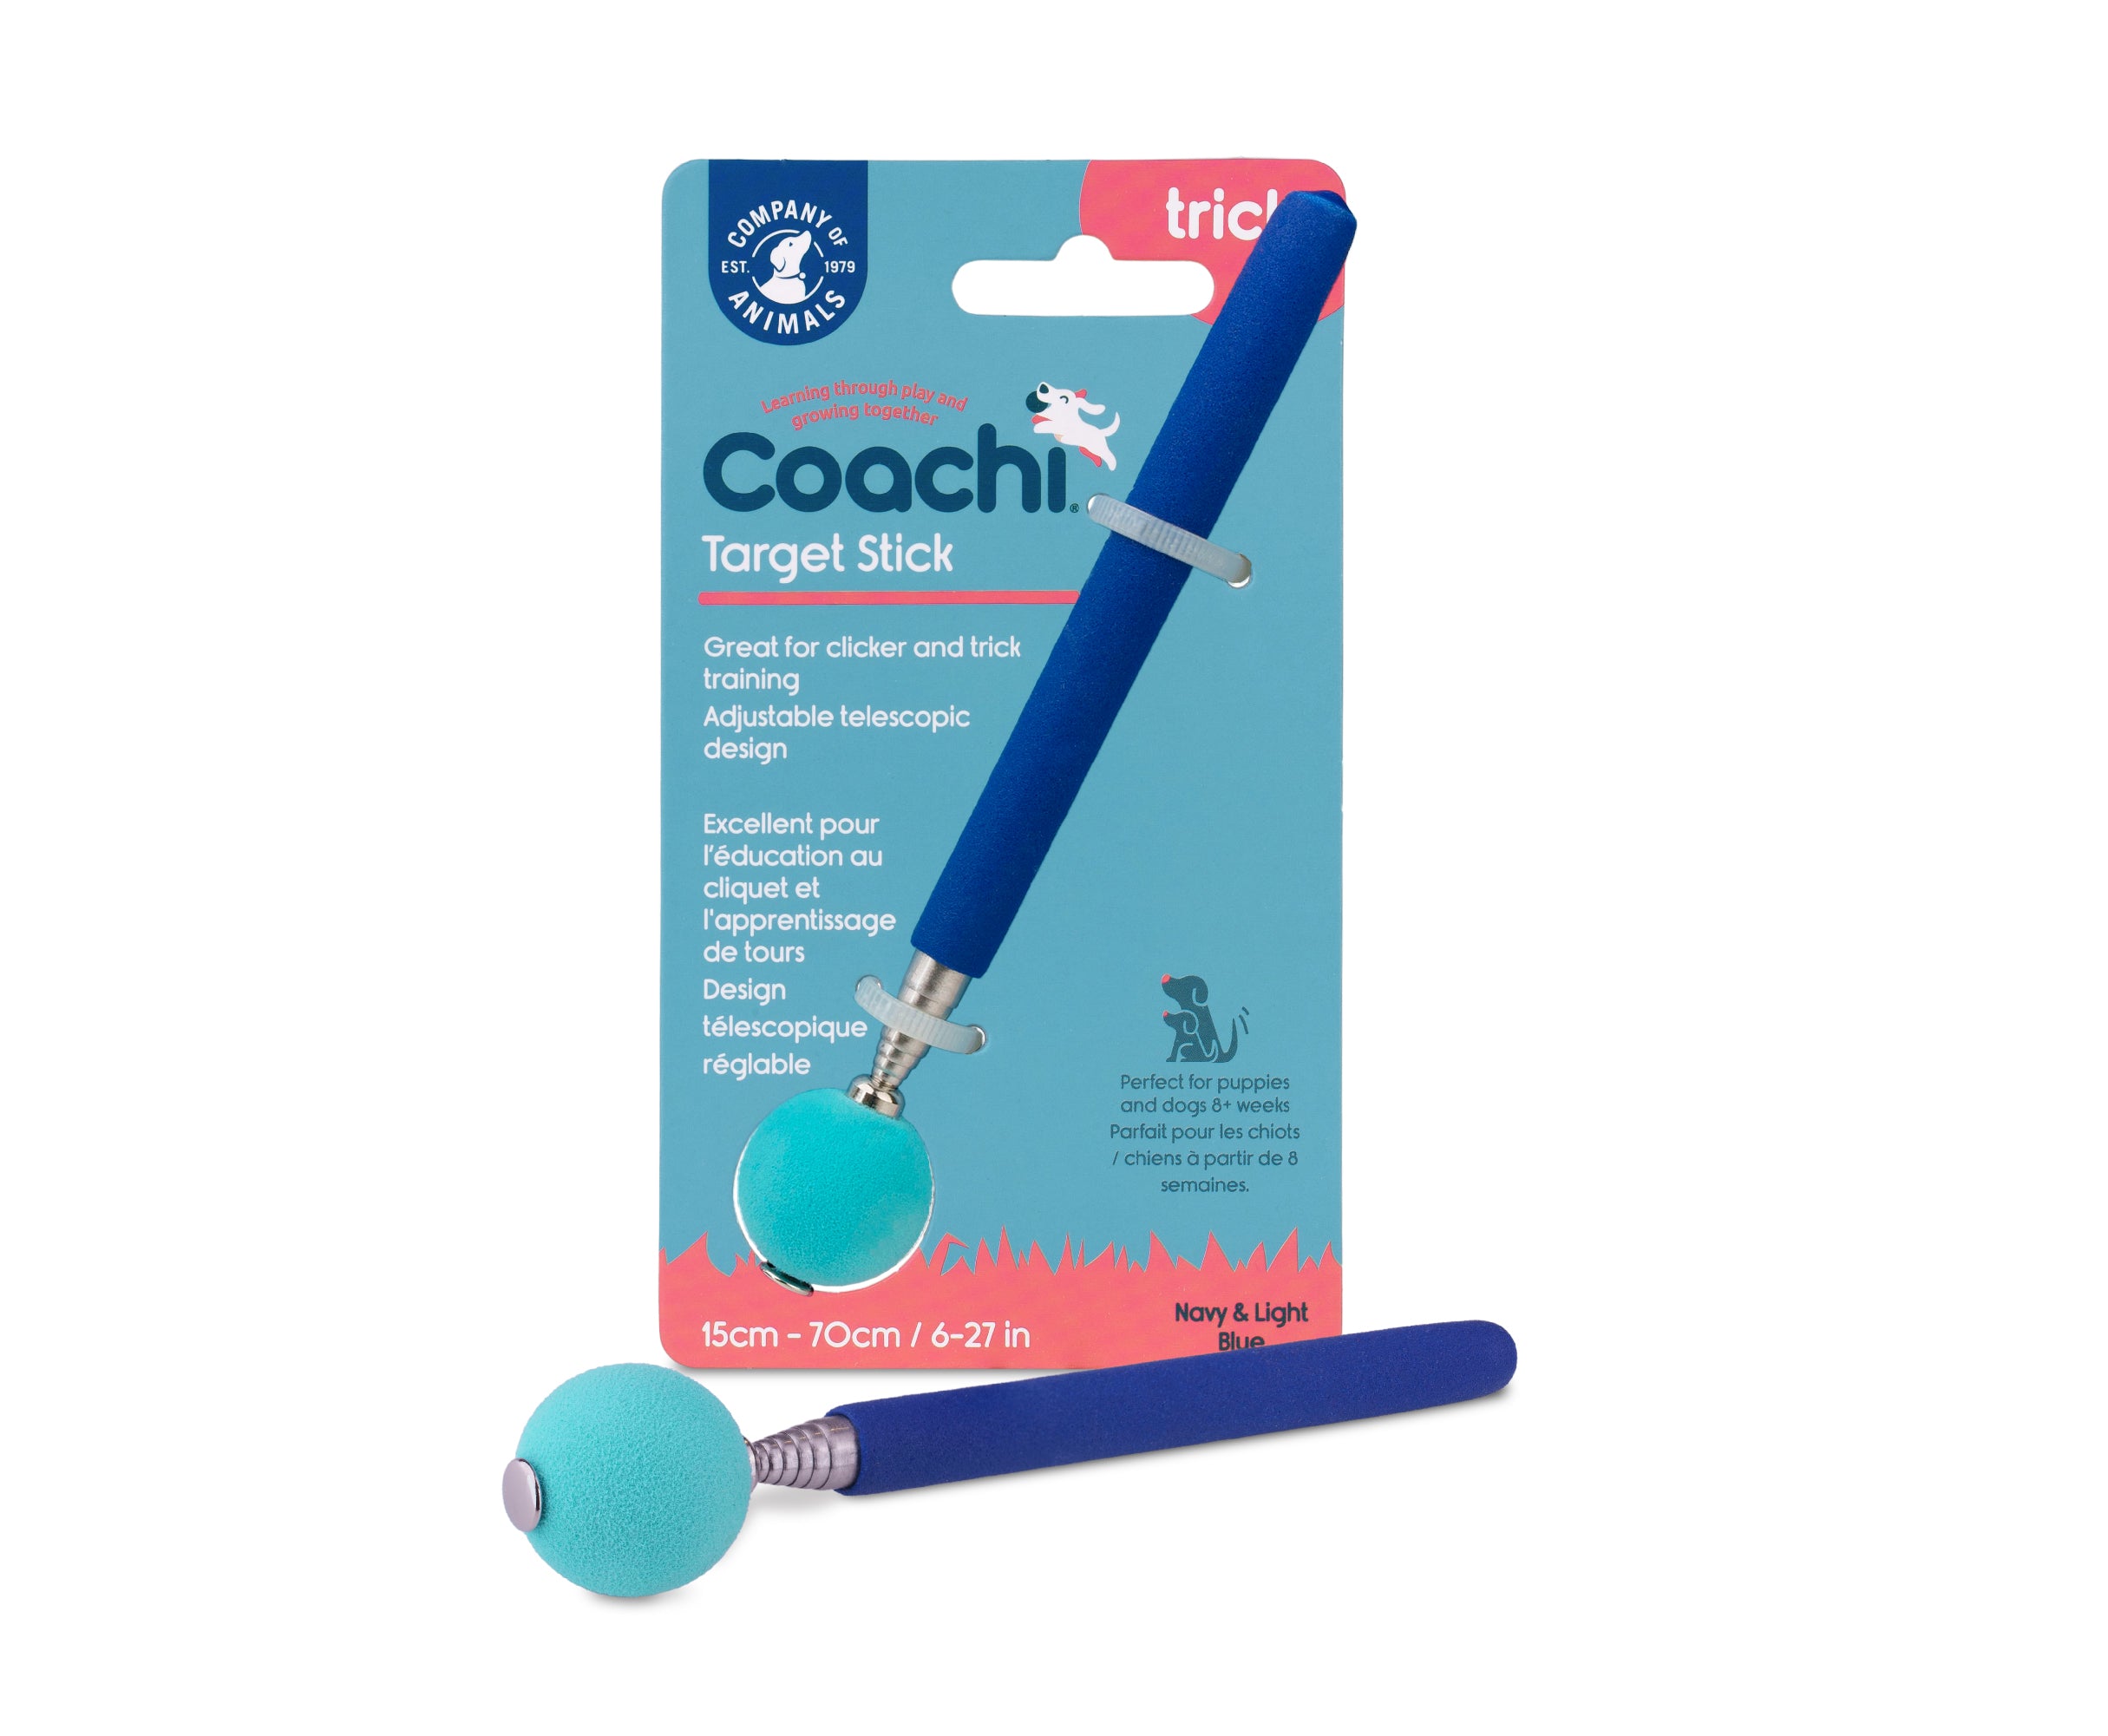 Coachi Dog Training Target Stick (Navy & Light Blue)